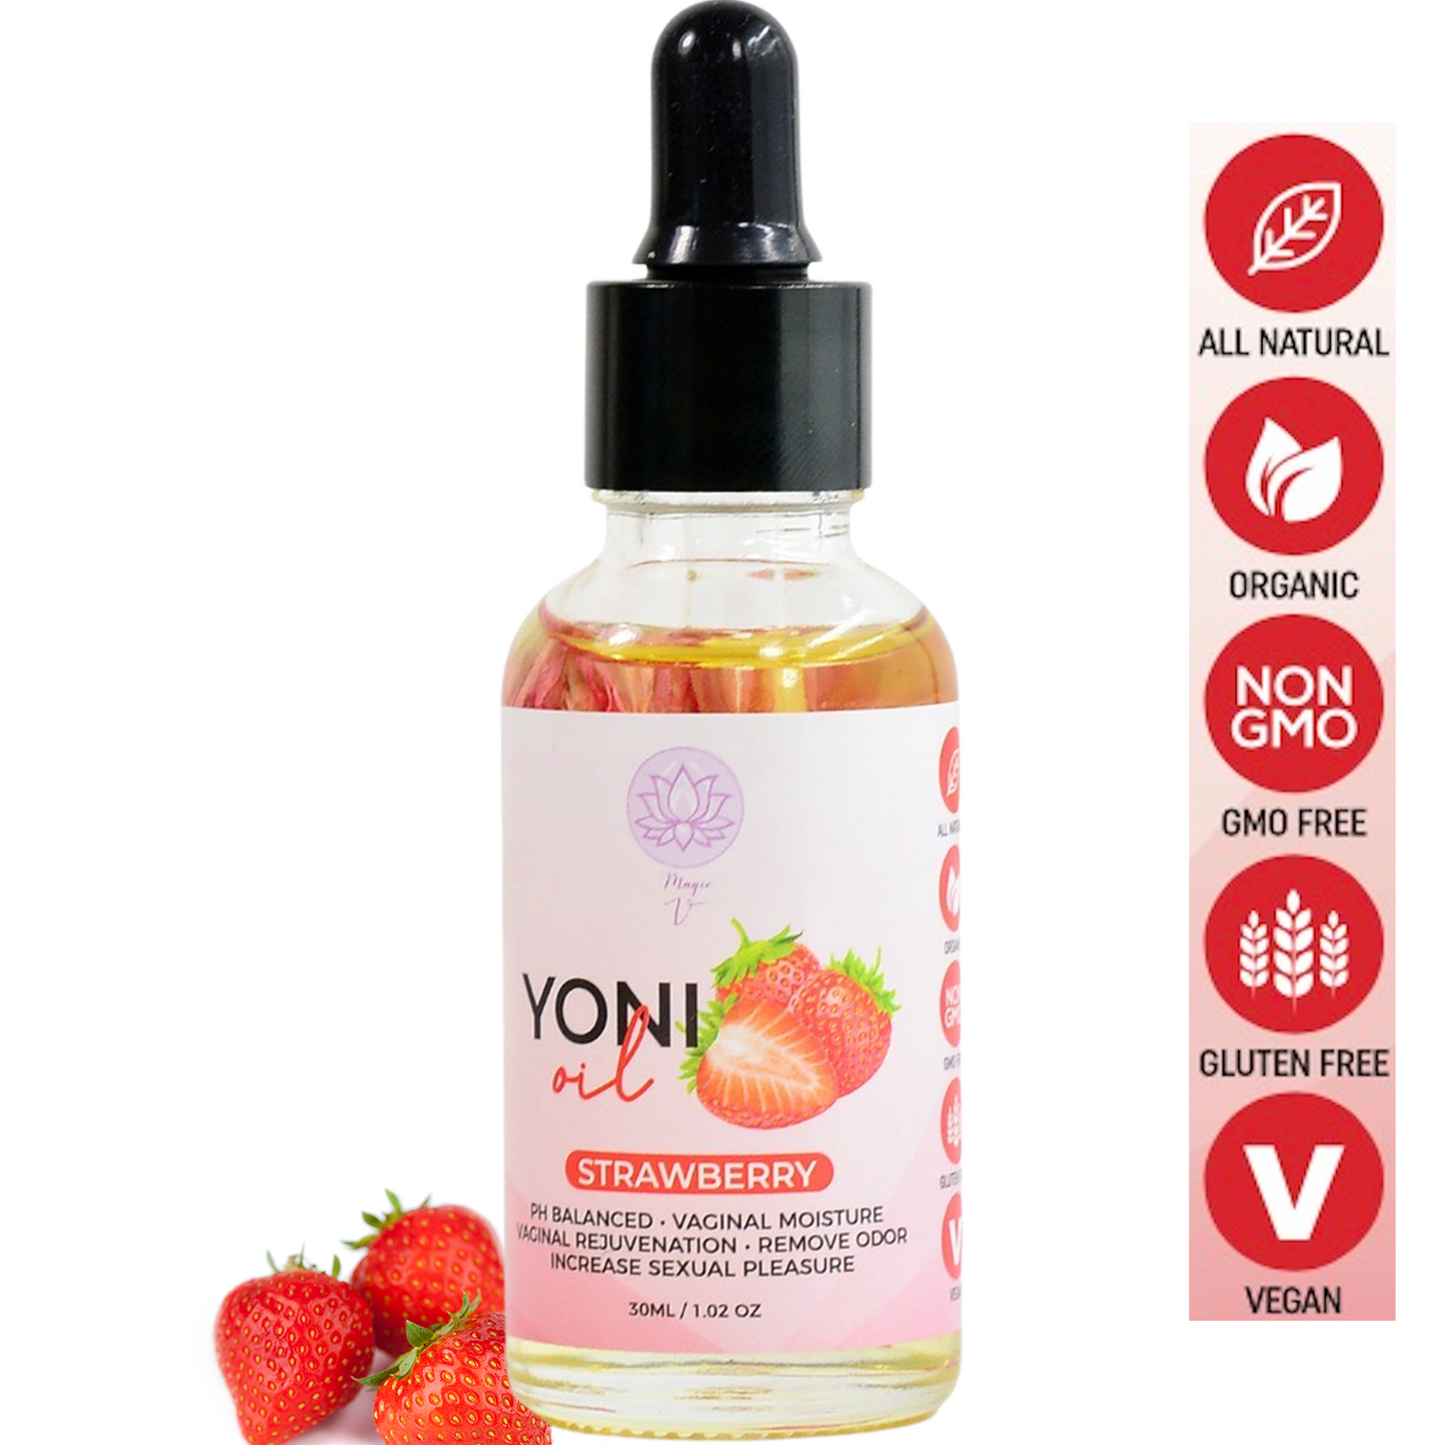 Magic v Yoni Oil Organic Feminine Vaginal Moisturizer